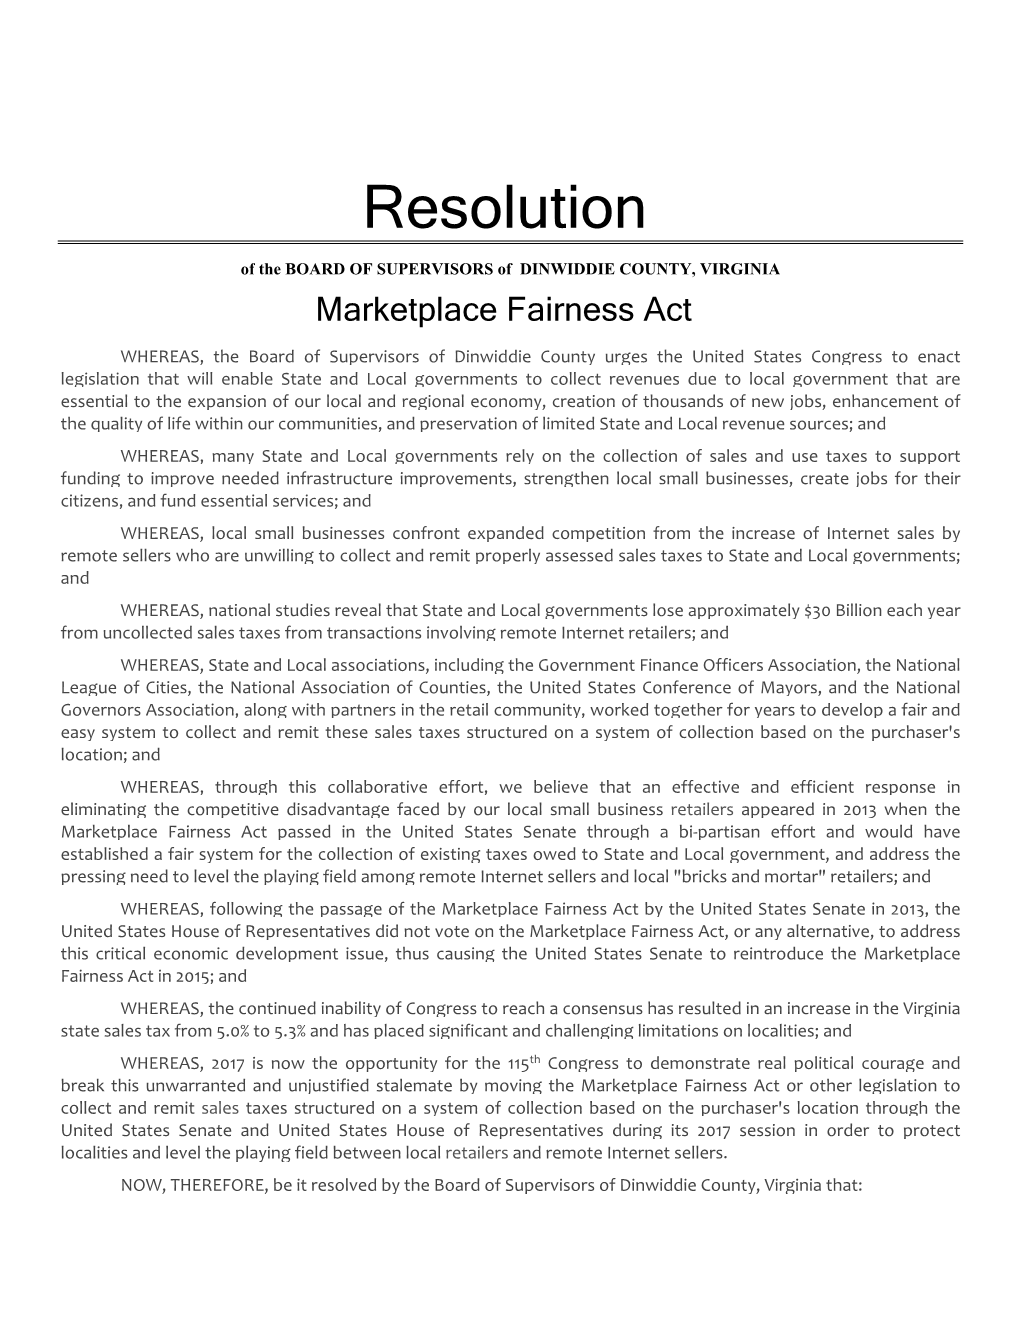 Marketplace Fairness Act